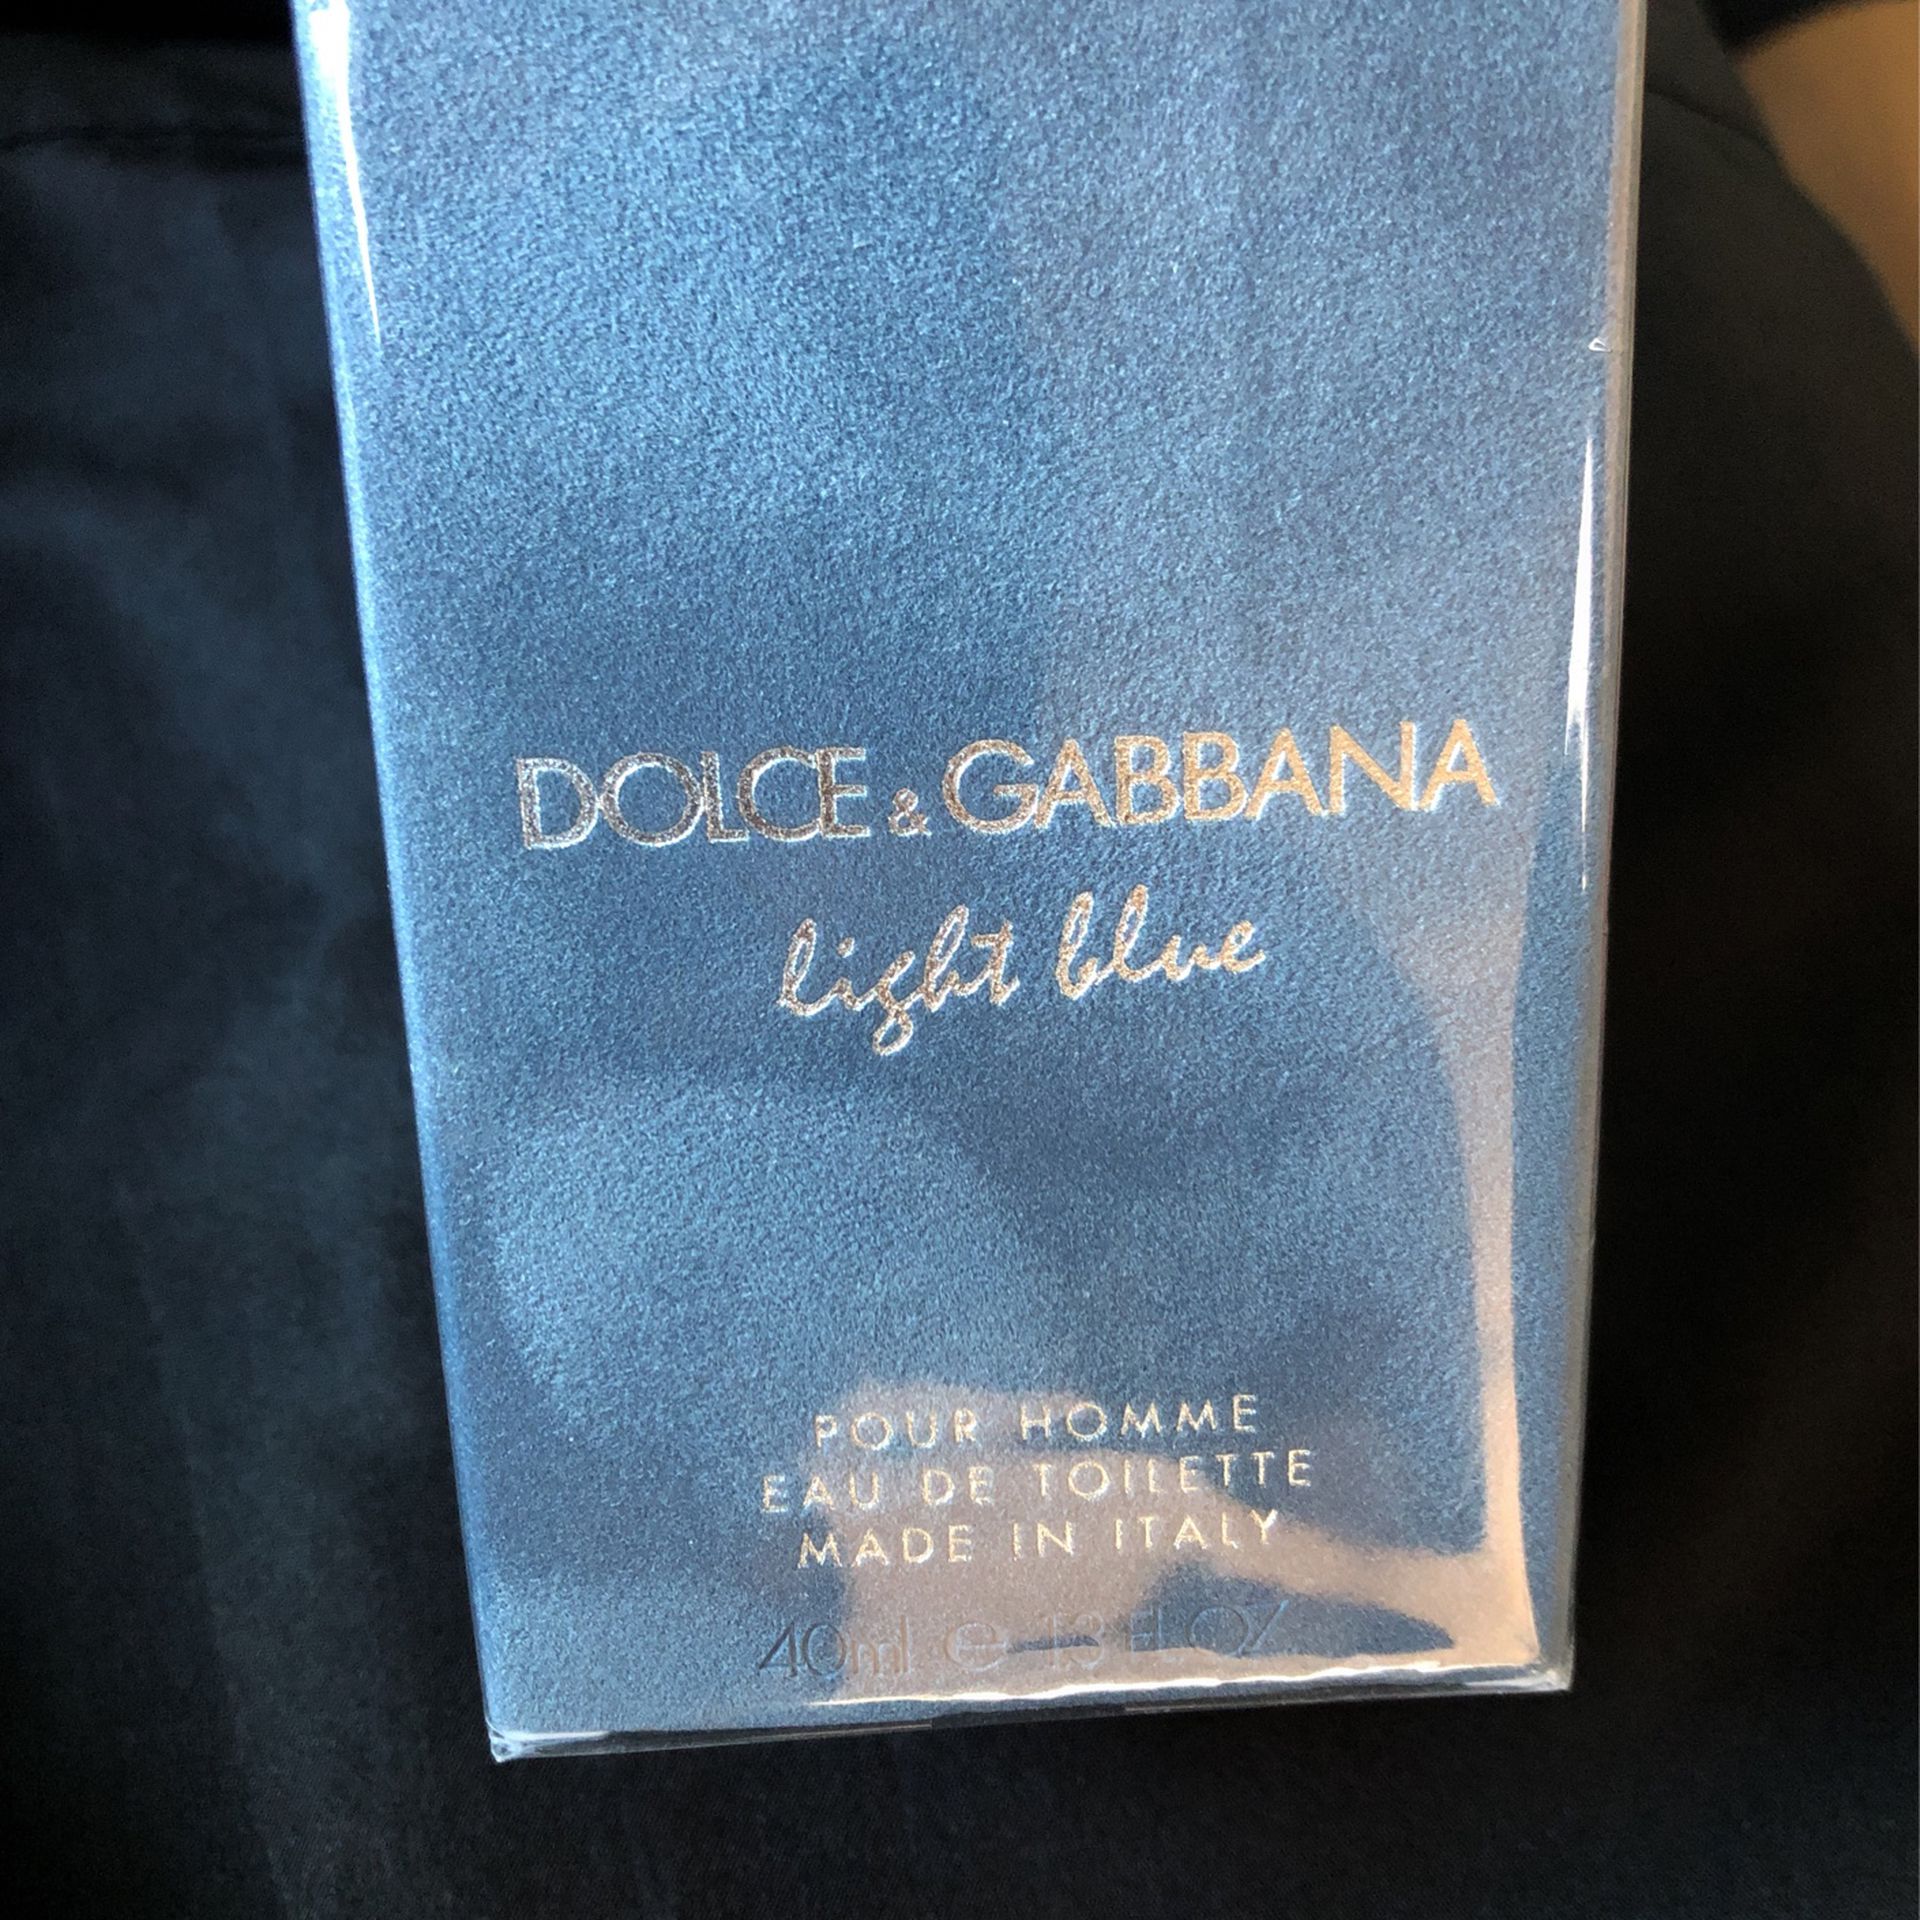 Dolce & Gabbana “light blue” cologne 40mL/1.3 FL OZ